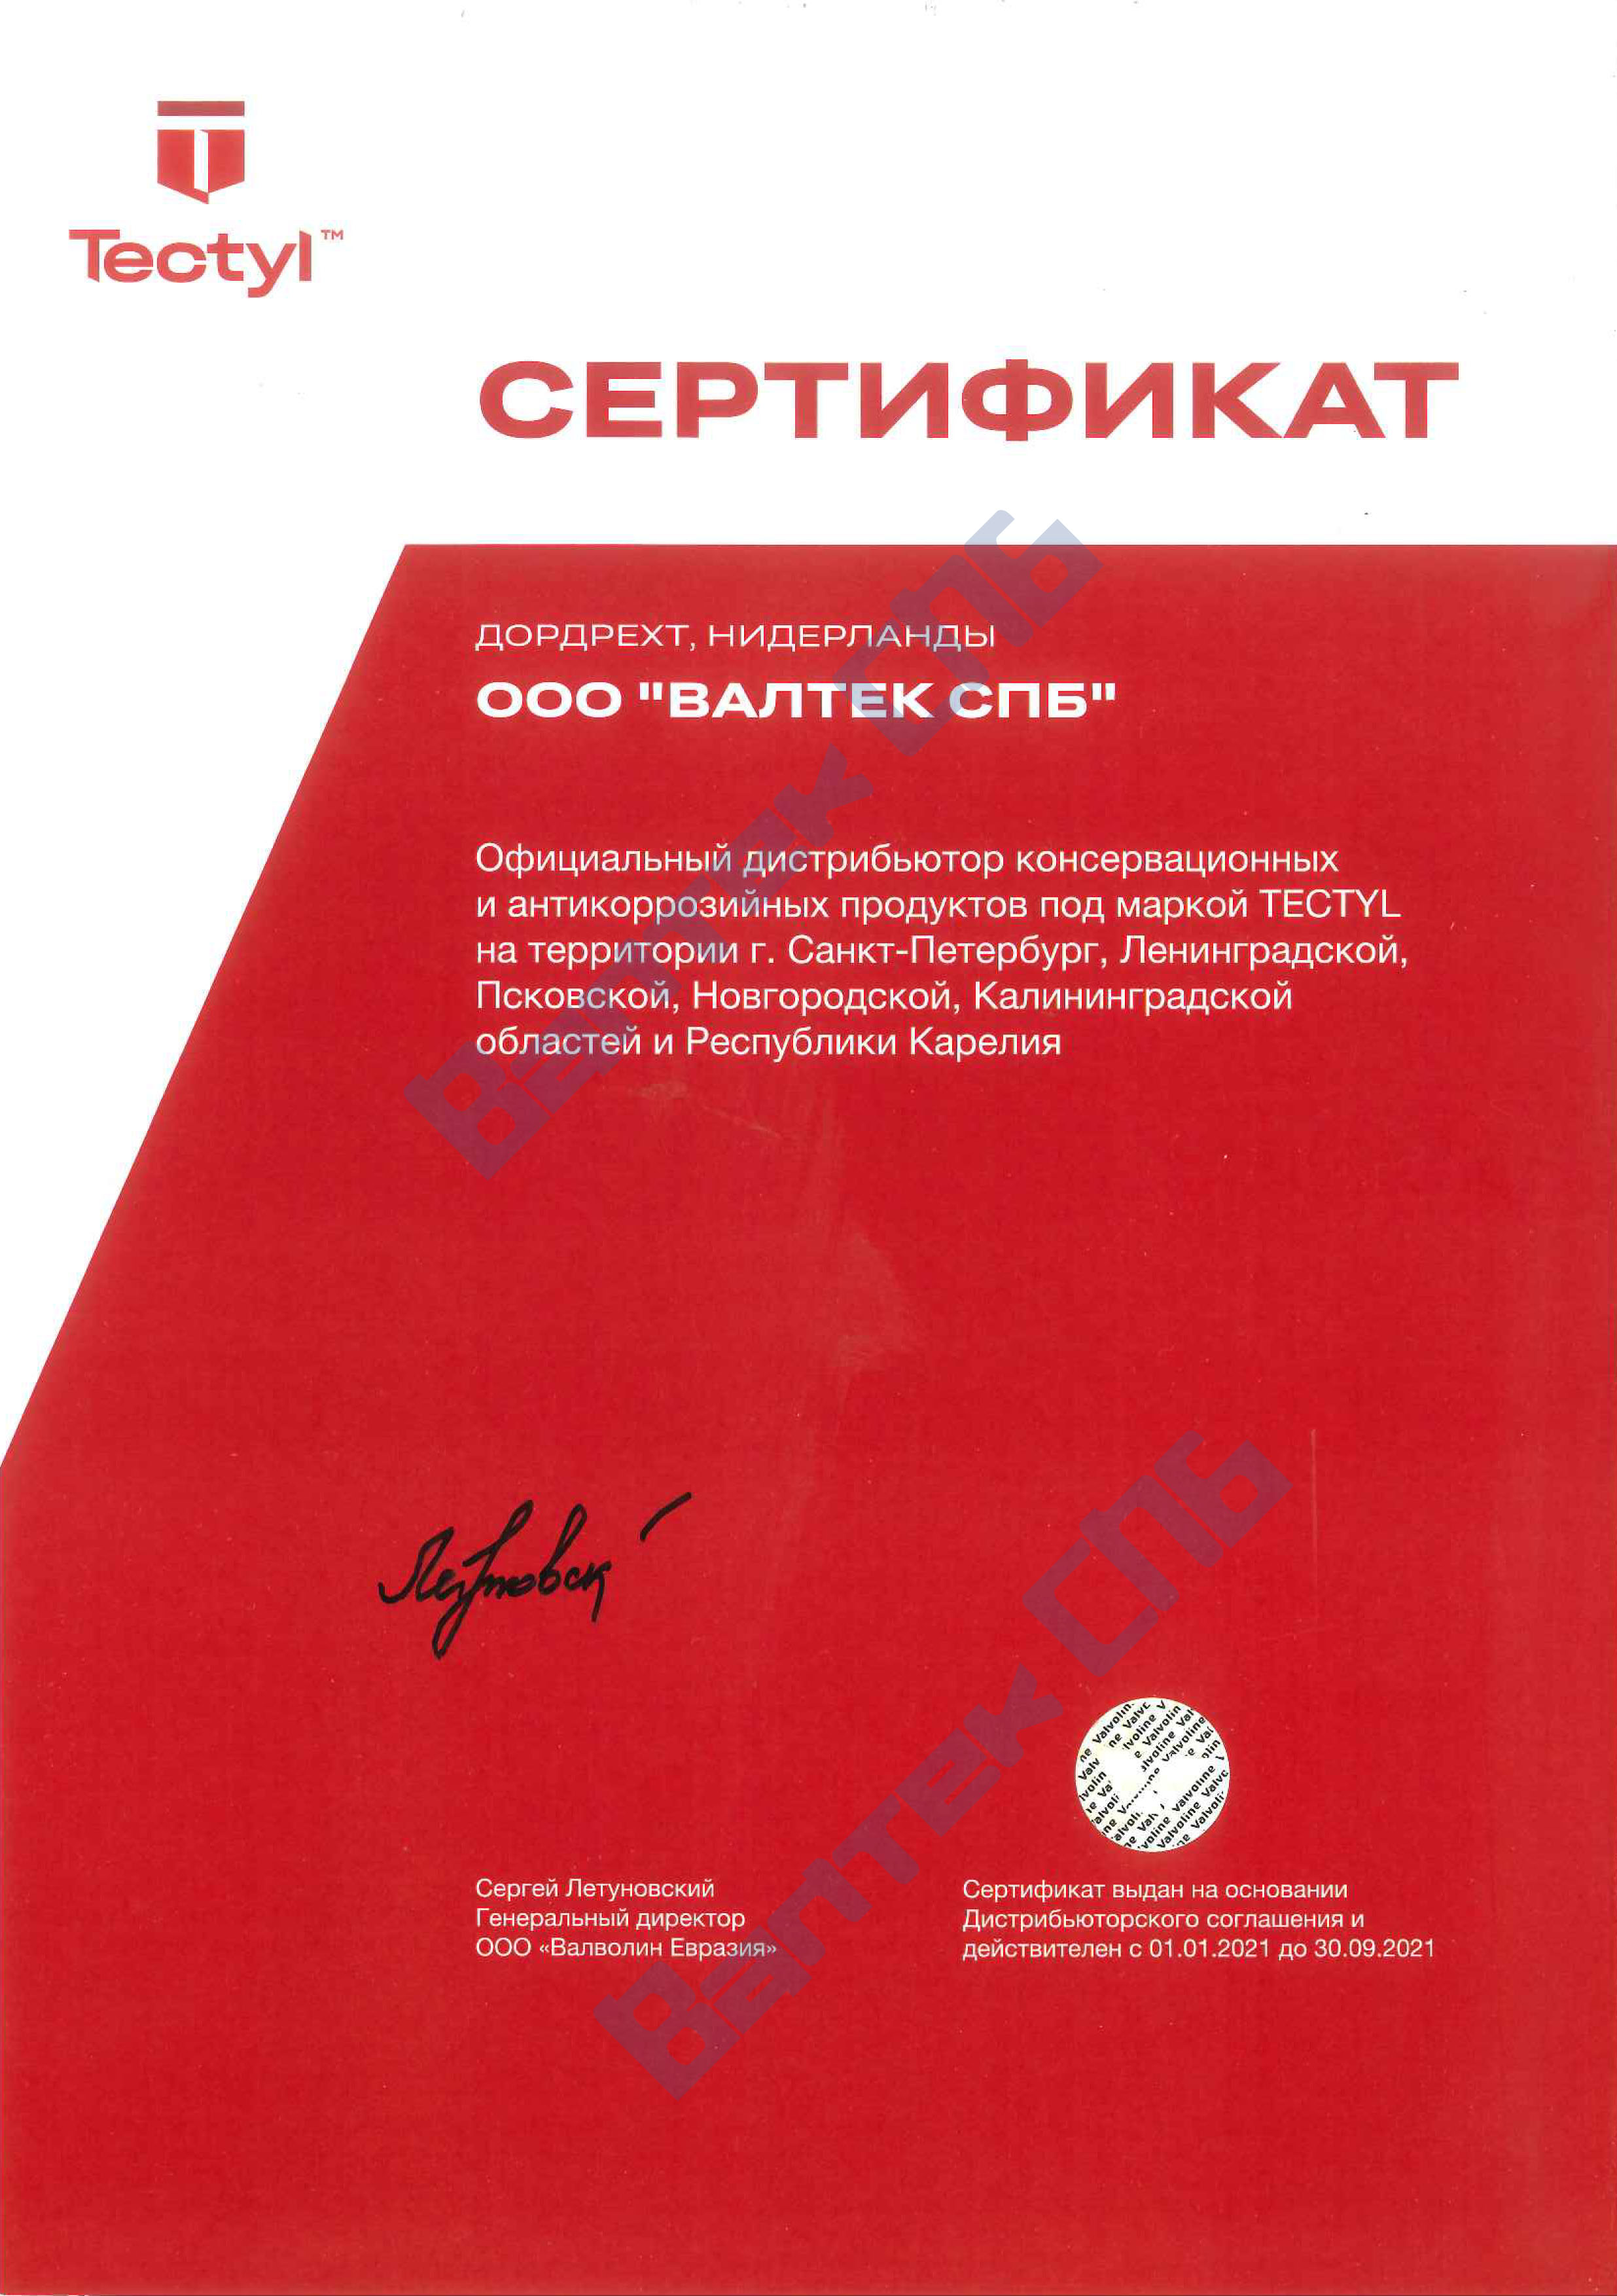 Сертификат официального дистрибьютора Tectyl